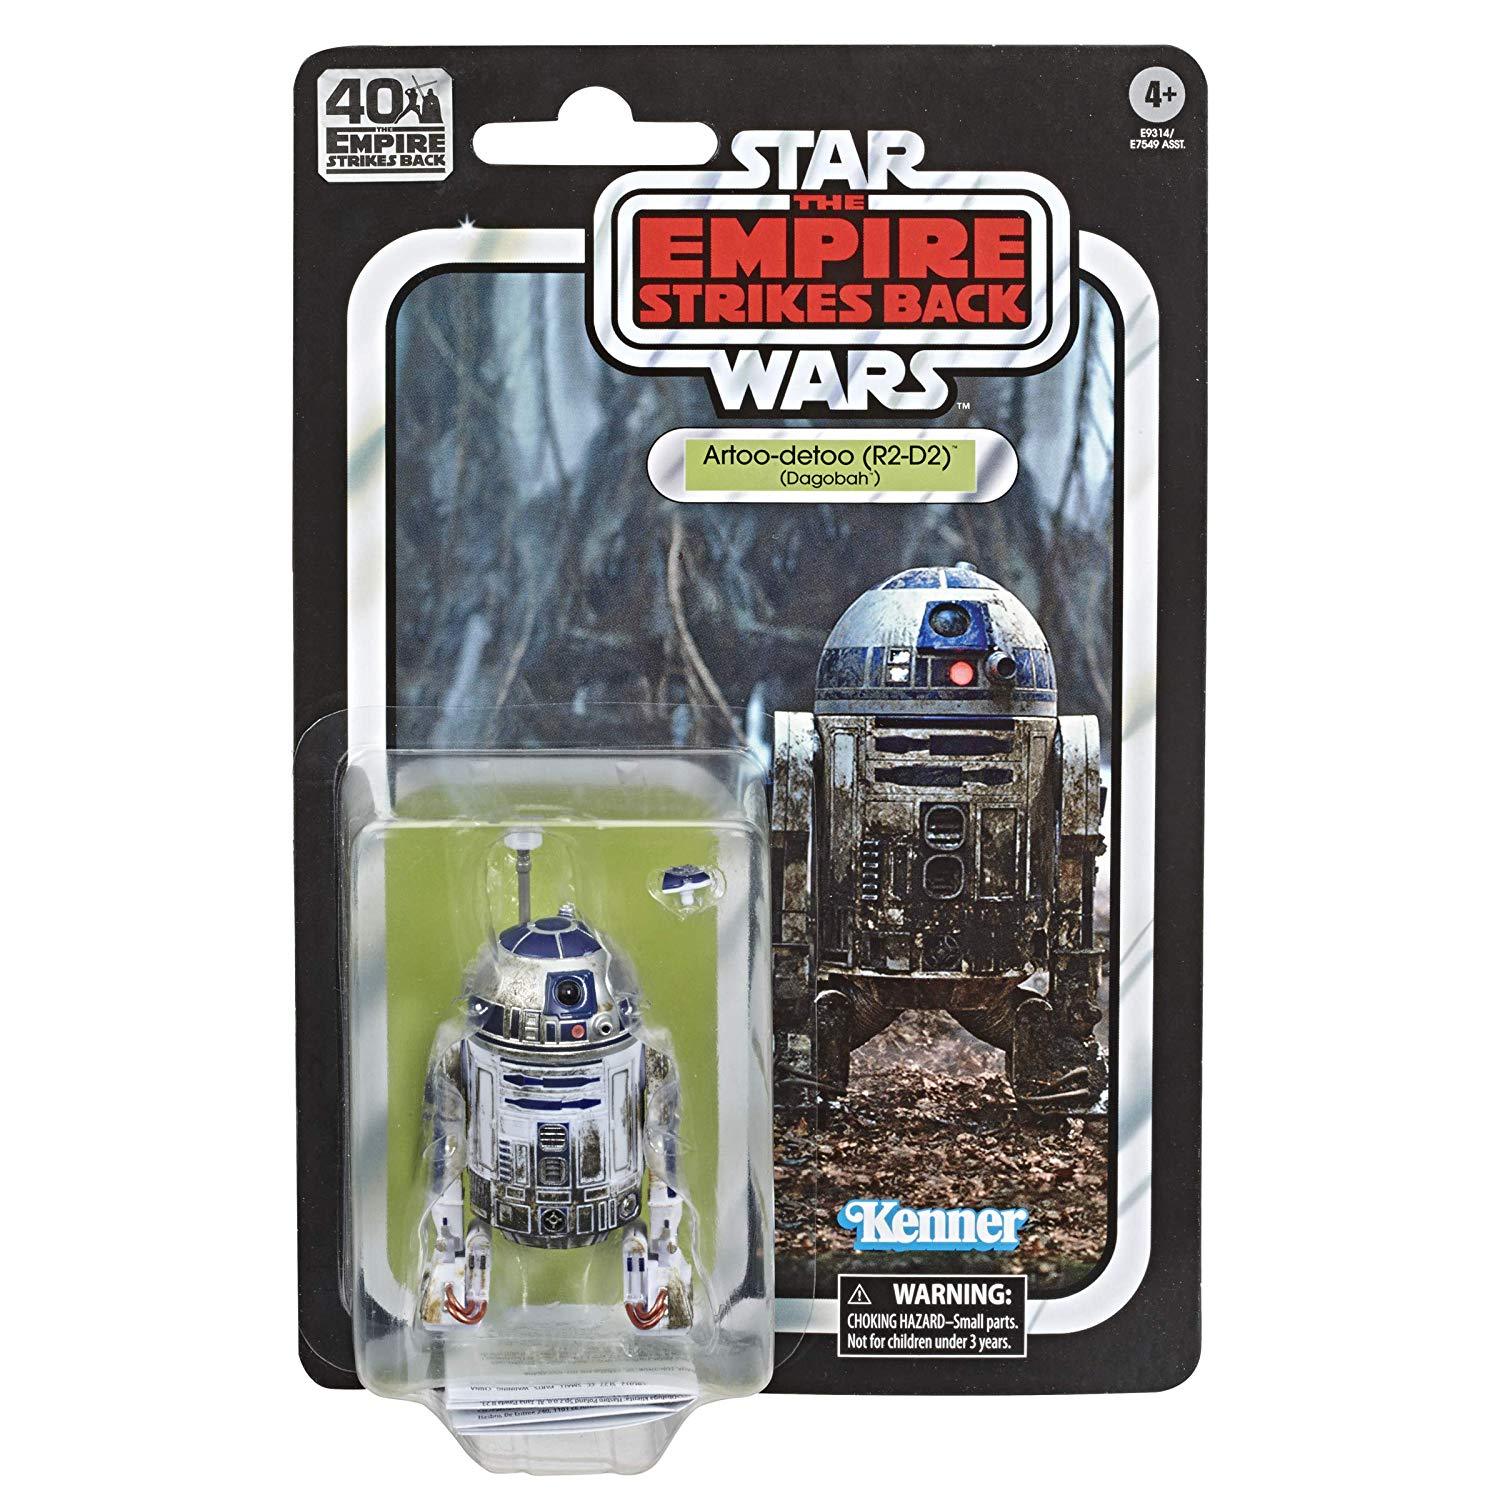 Star Wars 40th Anniversary Empire Strikes Back Black 6" Series R2-D2 Dagobah